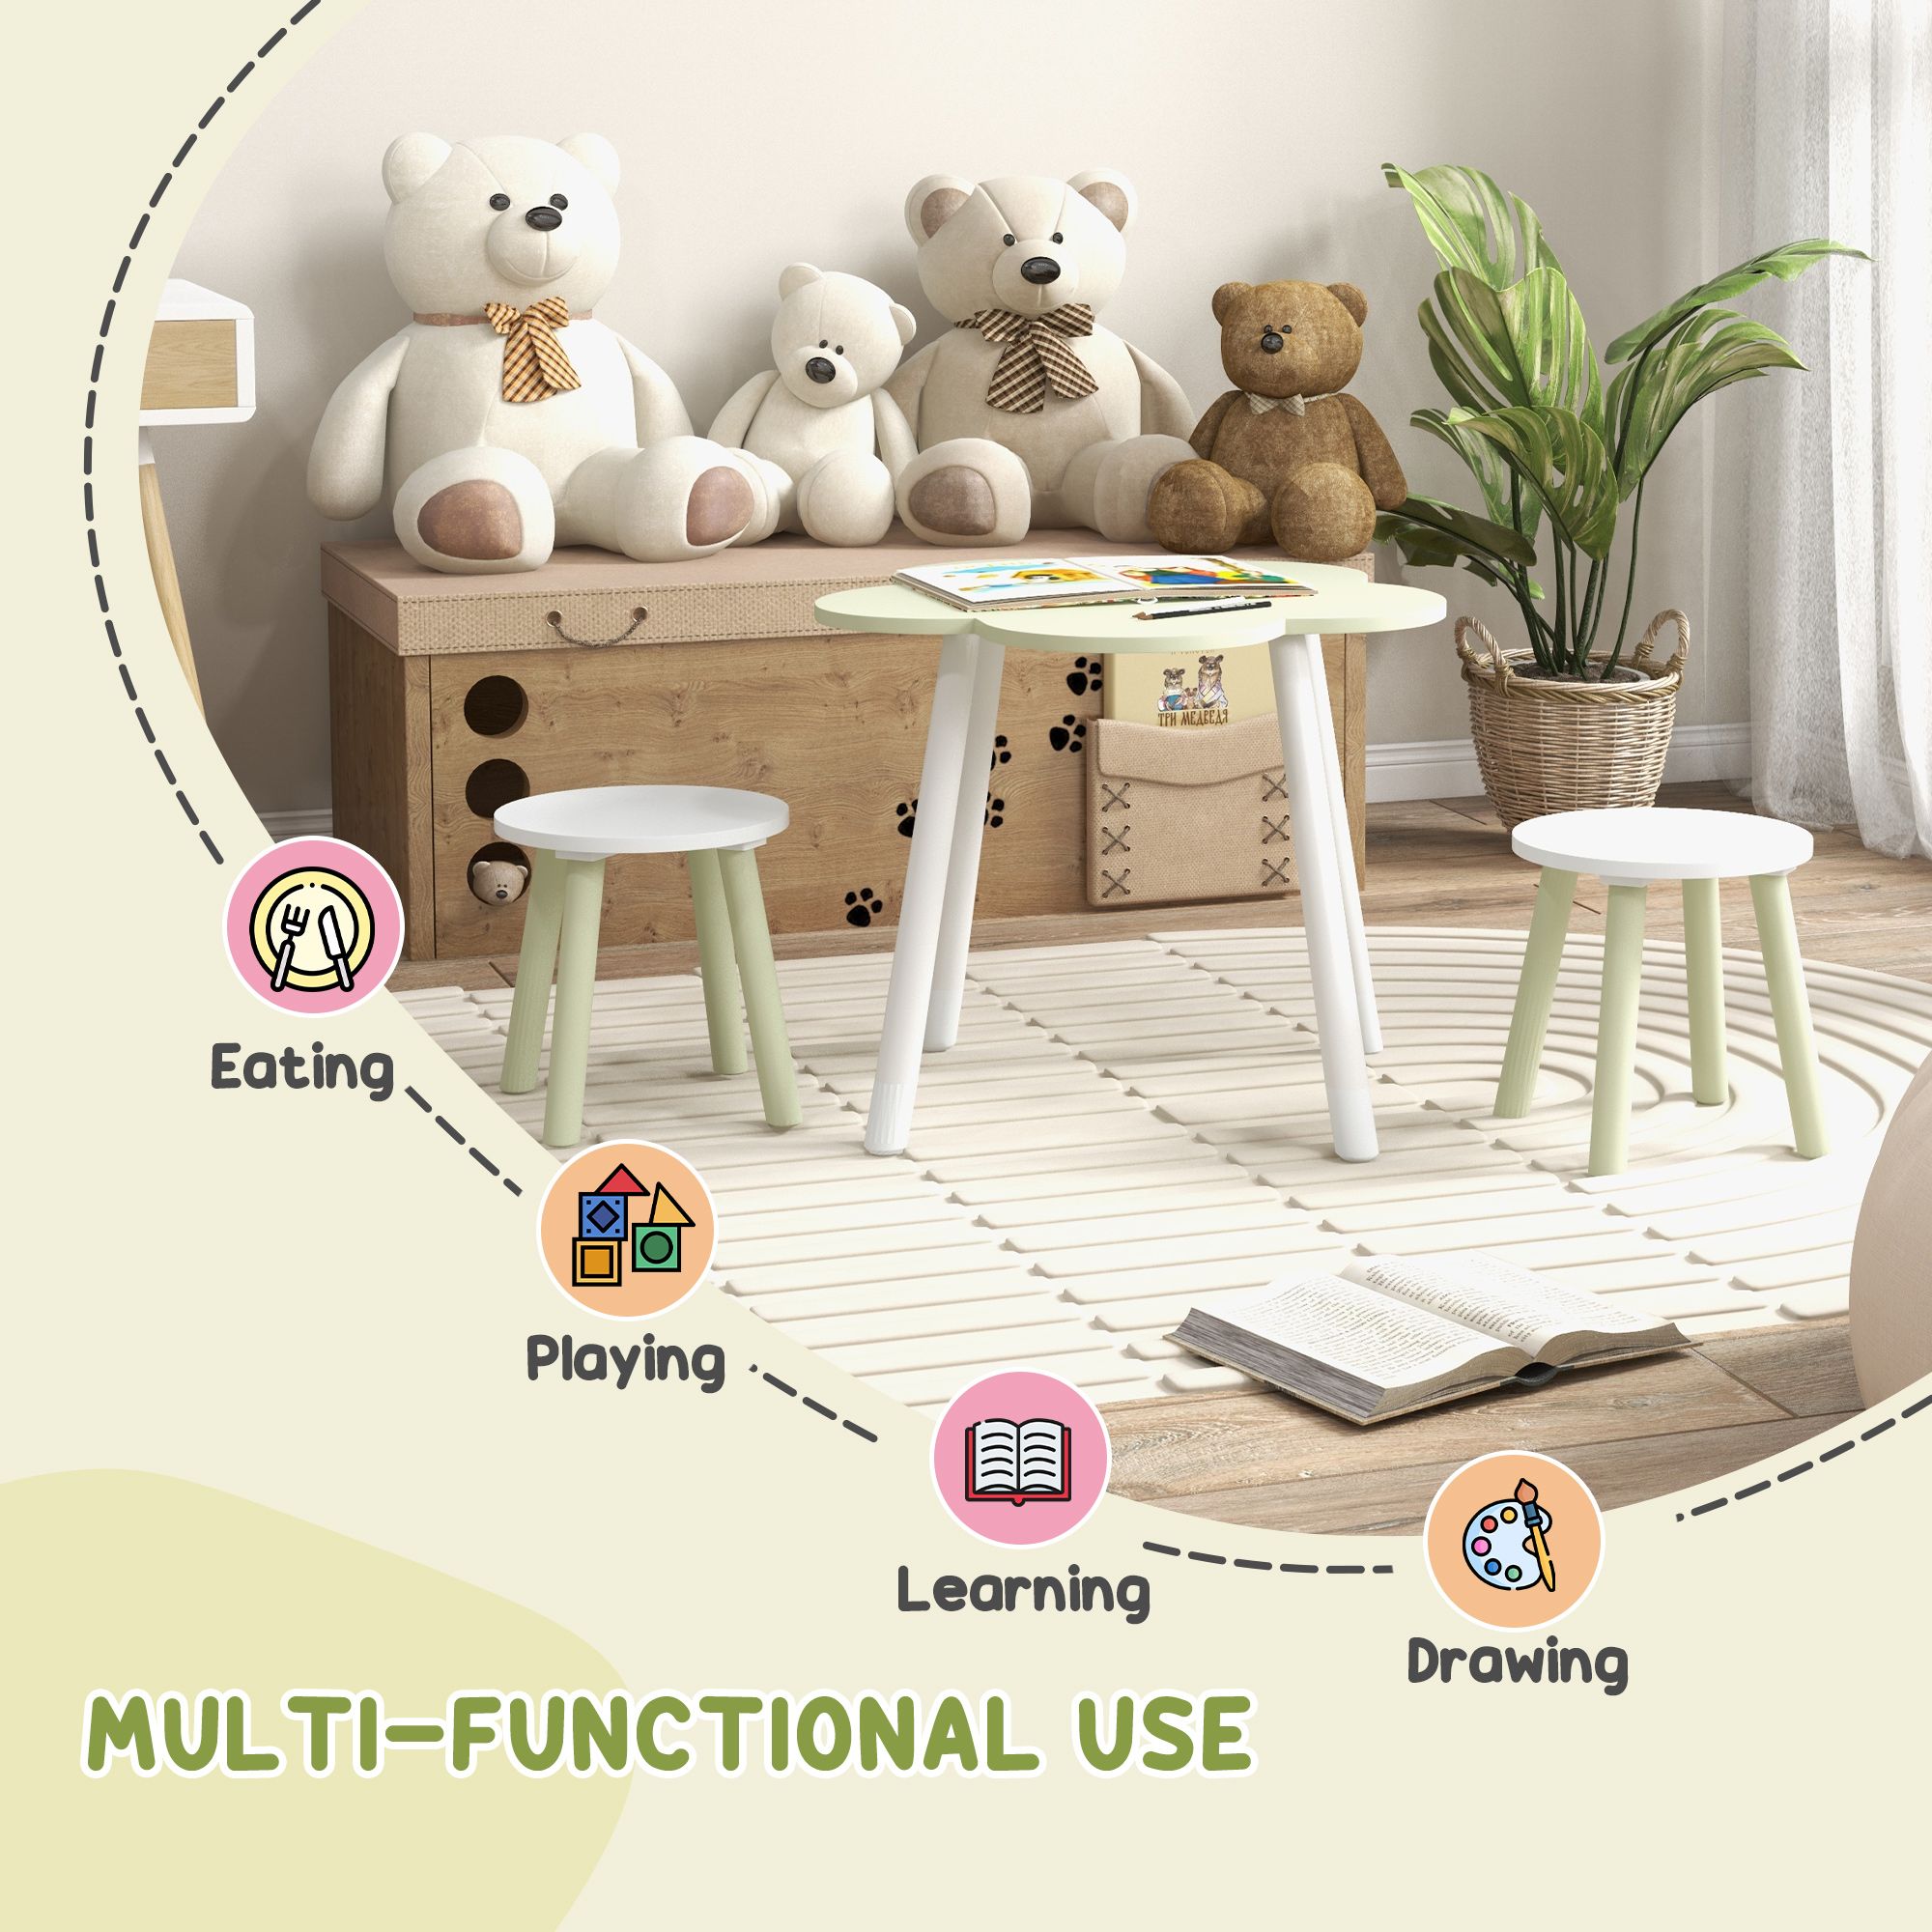 Zonekiz 3 Piece Kids Table And Chair Sets, Flower Design Children Furniture Set For Bedroom, Nursery, Playroom, Yellow